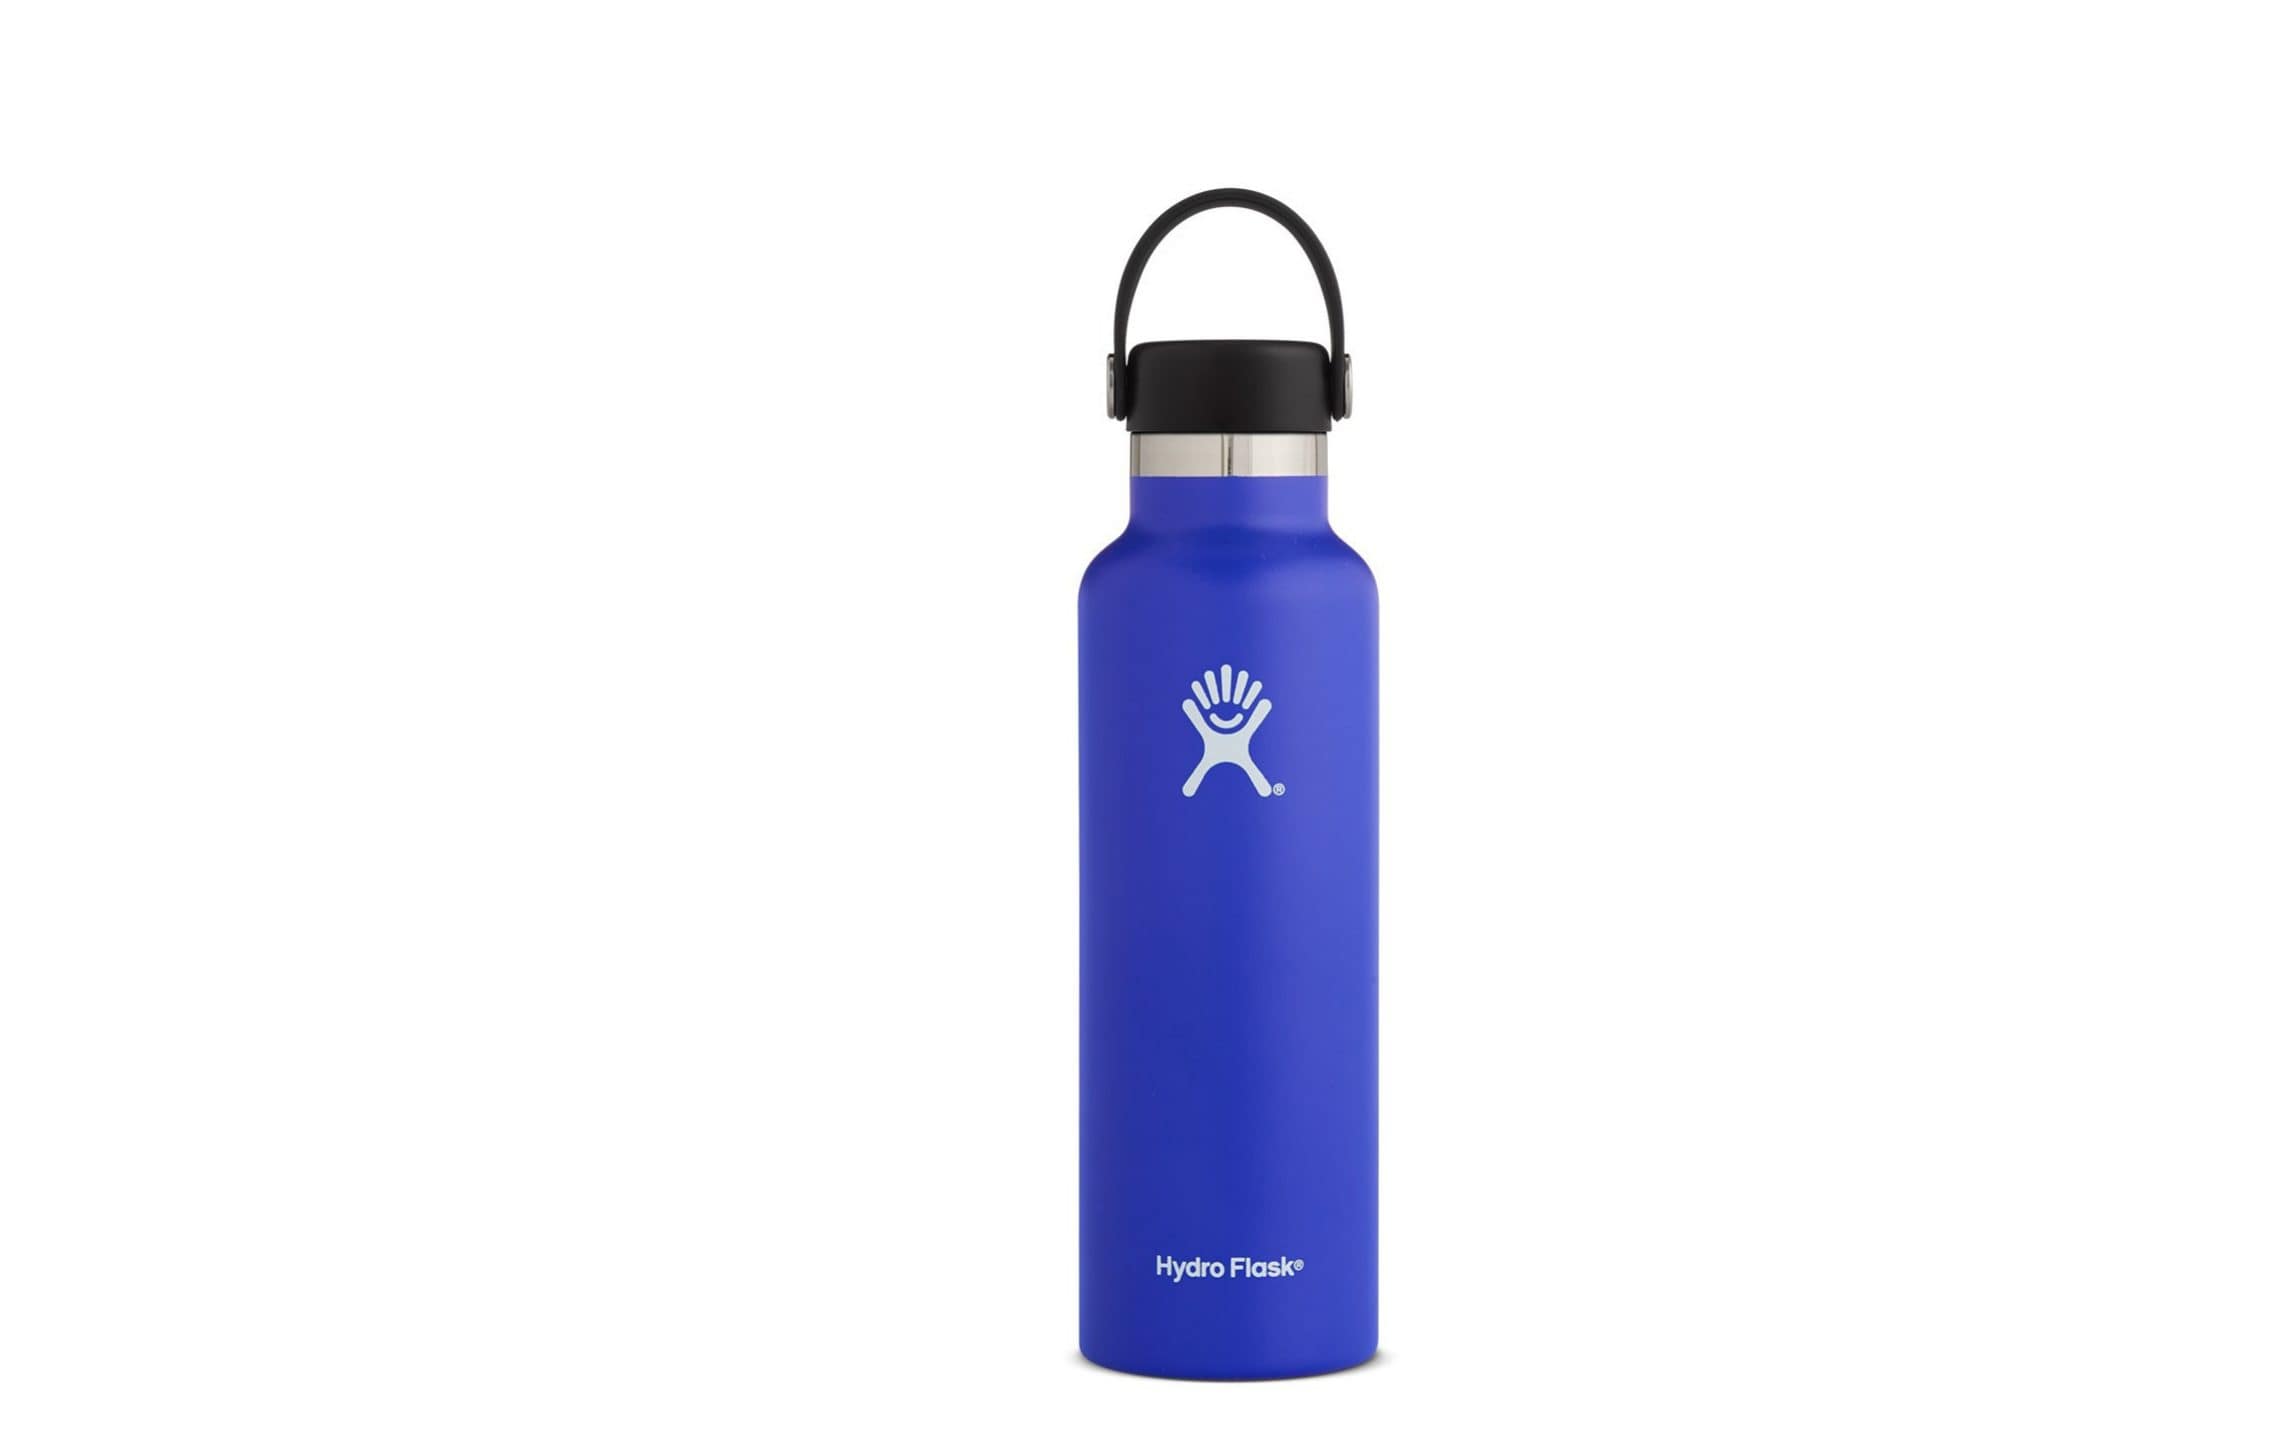 The best reusable water bottles